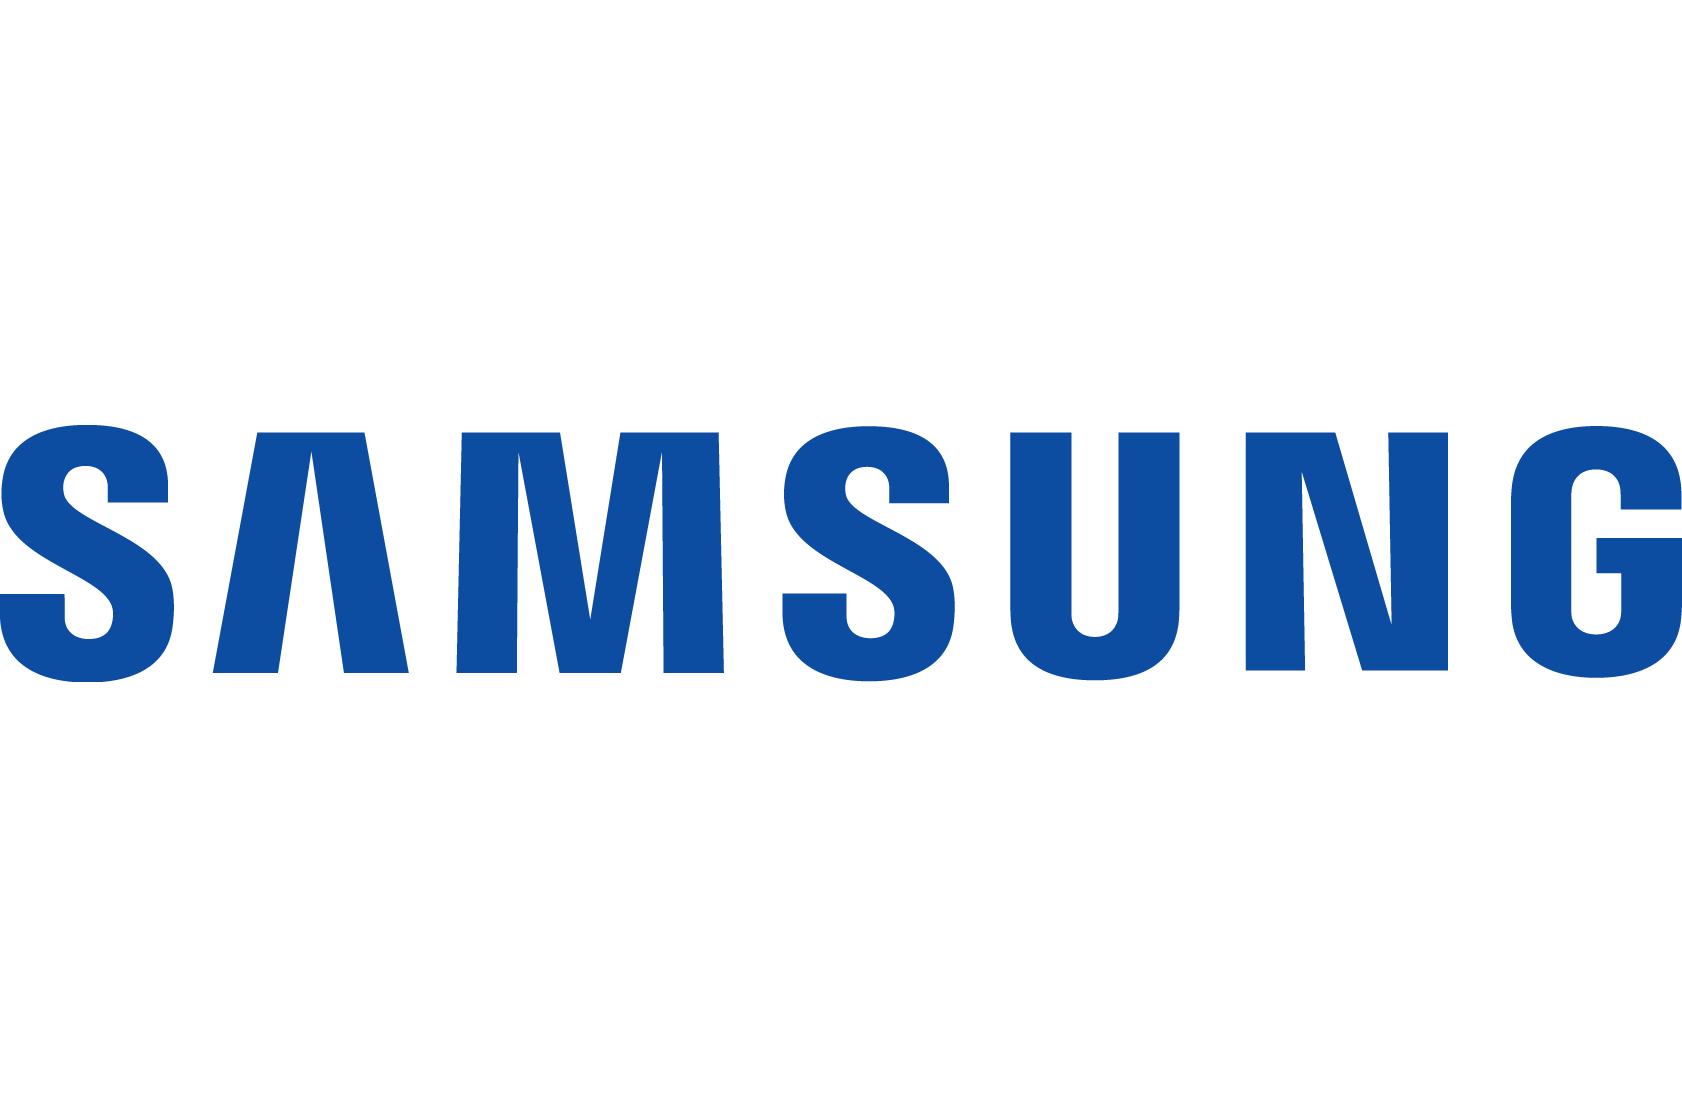 https://warrenenskat.com/wp-content/uploads/2019/01/Logo-Samsung.png